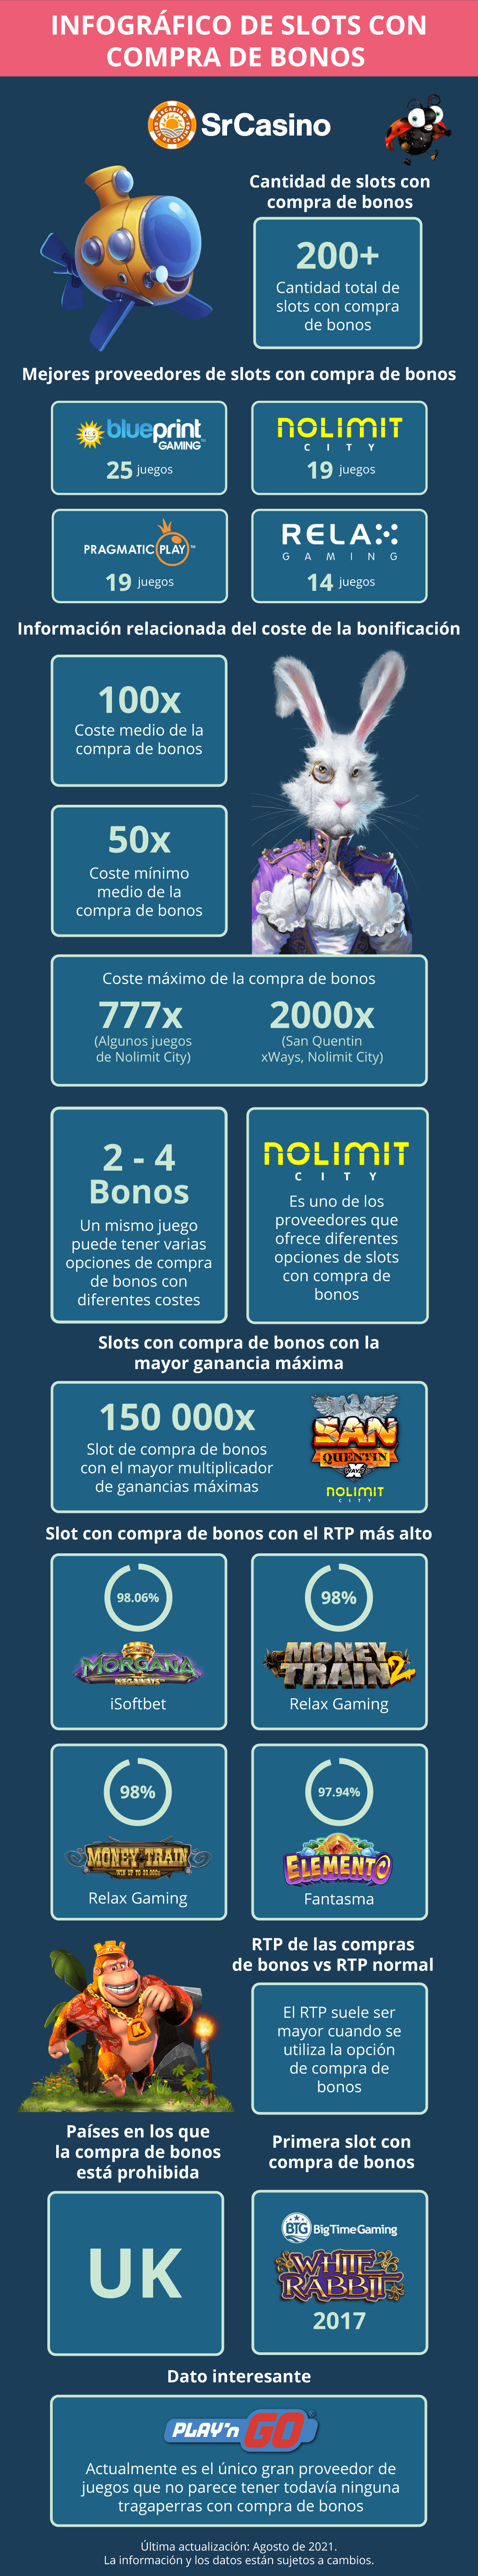 Infográficos de Slots con Compra de Bonos en España